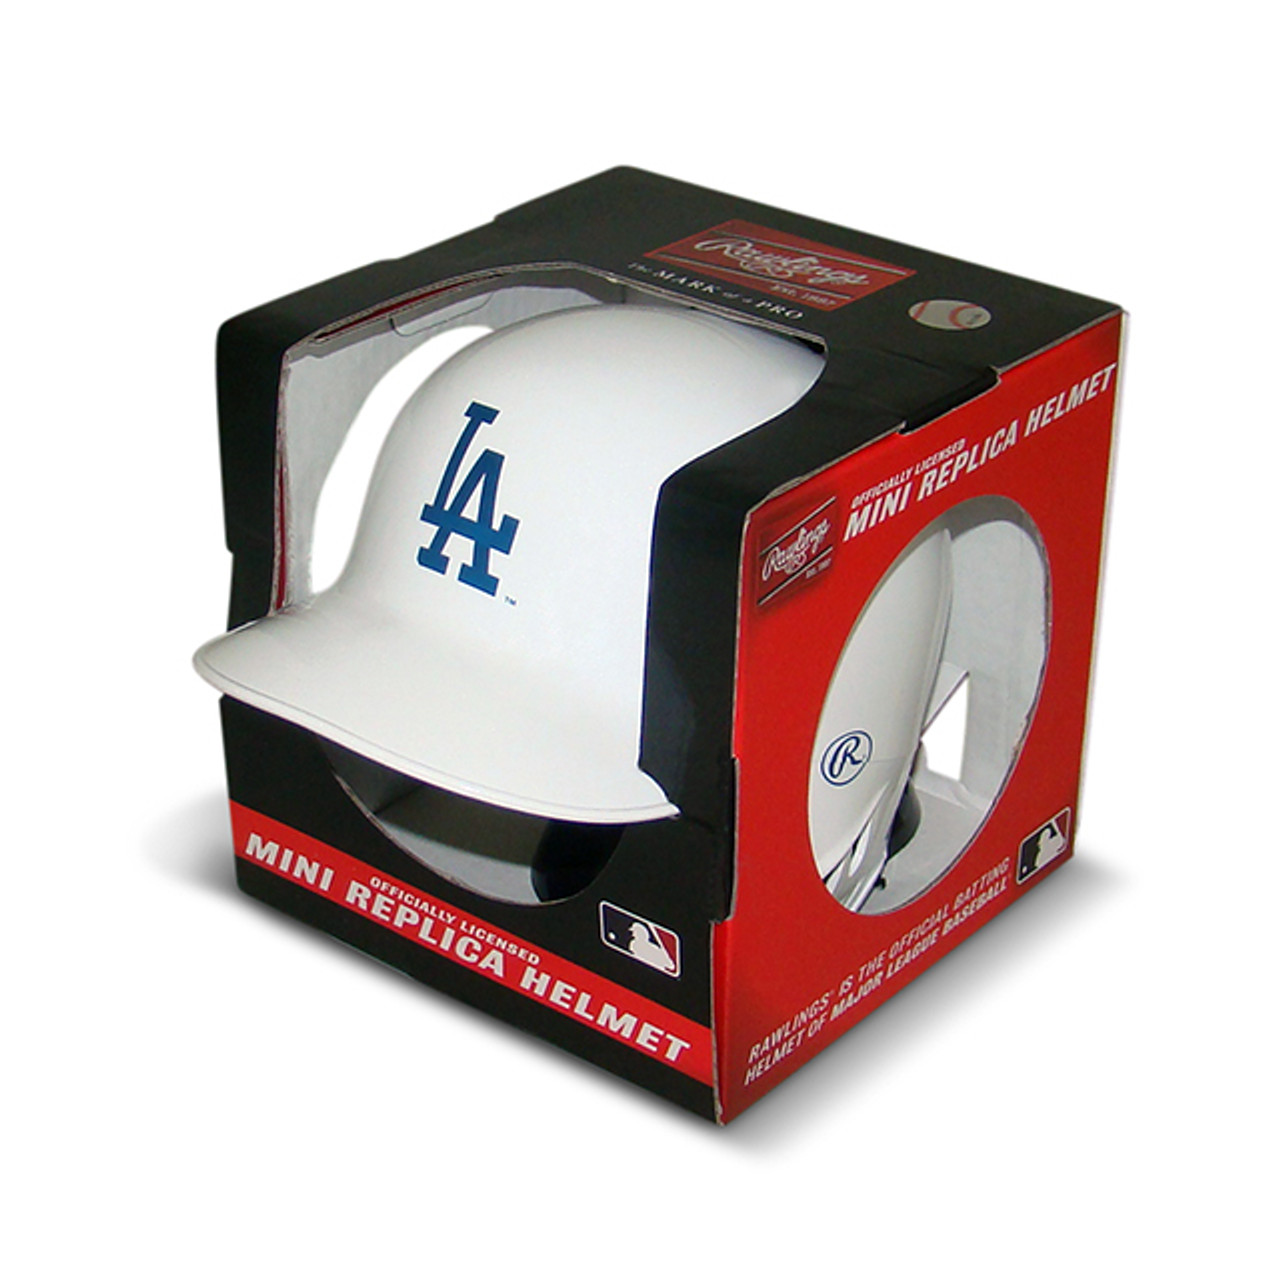 Mookie Betts Los Angeles Dodgers Autographed Rawlings Alternate Chrome Mini Batting Helmet - Fanatics Exclusive